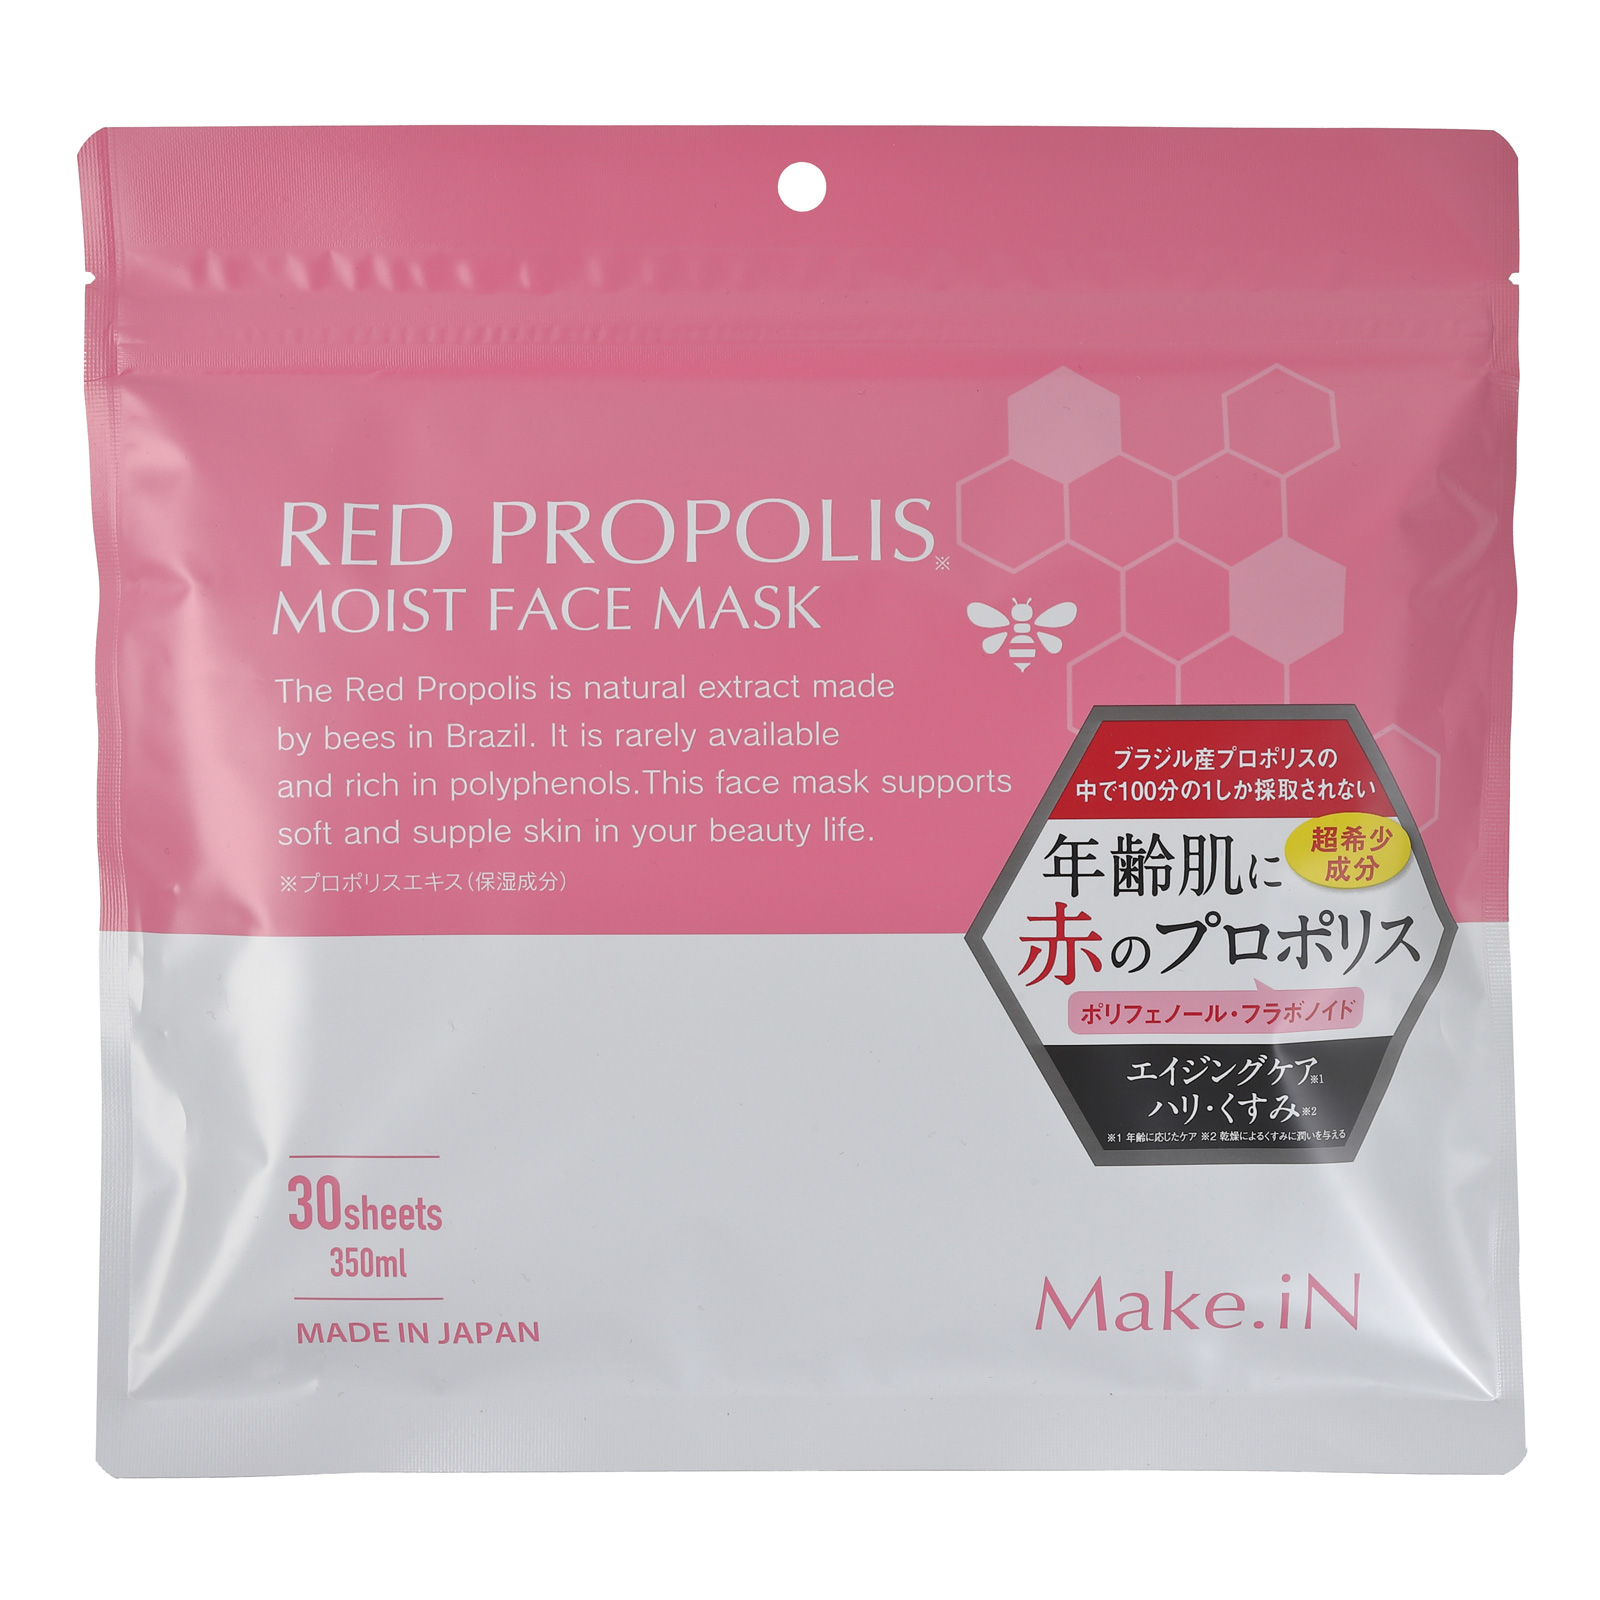 Make.iN Red Propolis Moist Face Mask. Увлажняющая маска для лица «Красный прополис» Мейк.иН, 30 шт. (350 мл)